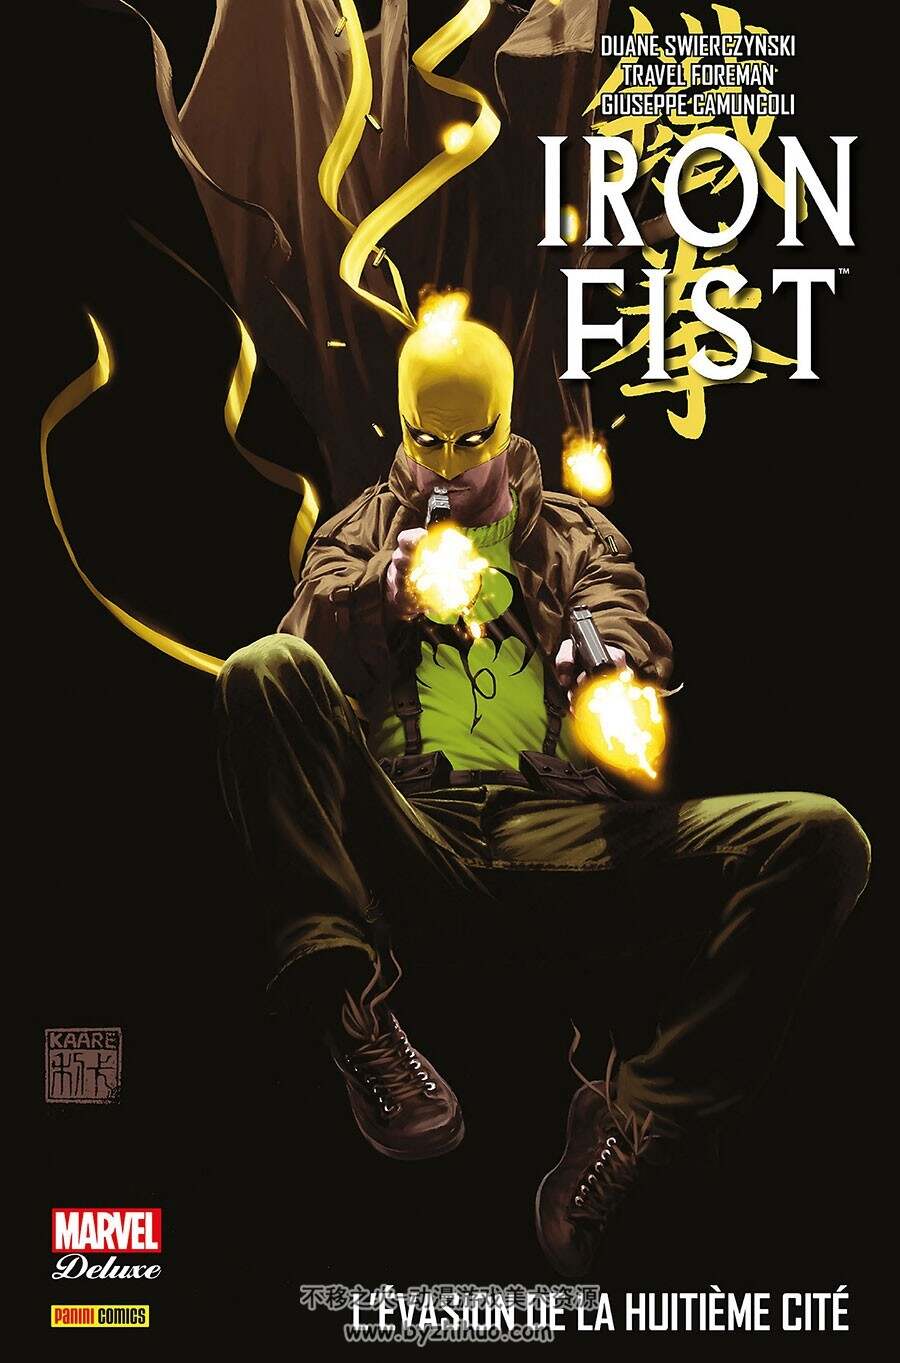 Iron Fist 1-3册 Ed Brubaker - Matt Fraction 欧美超级英雄漫画